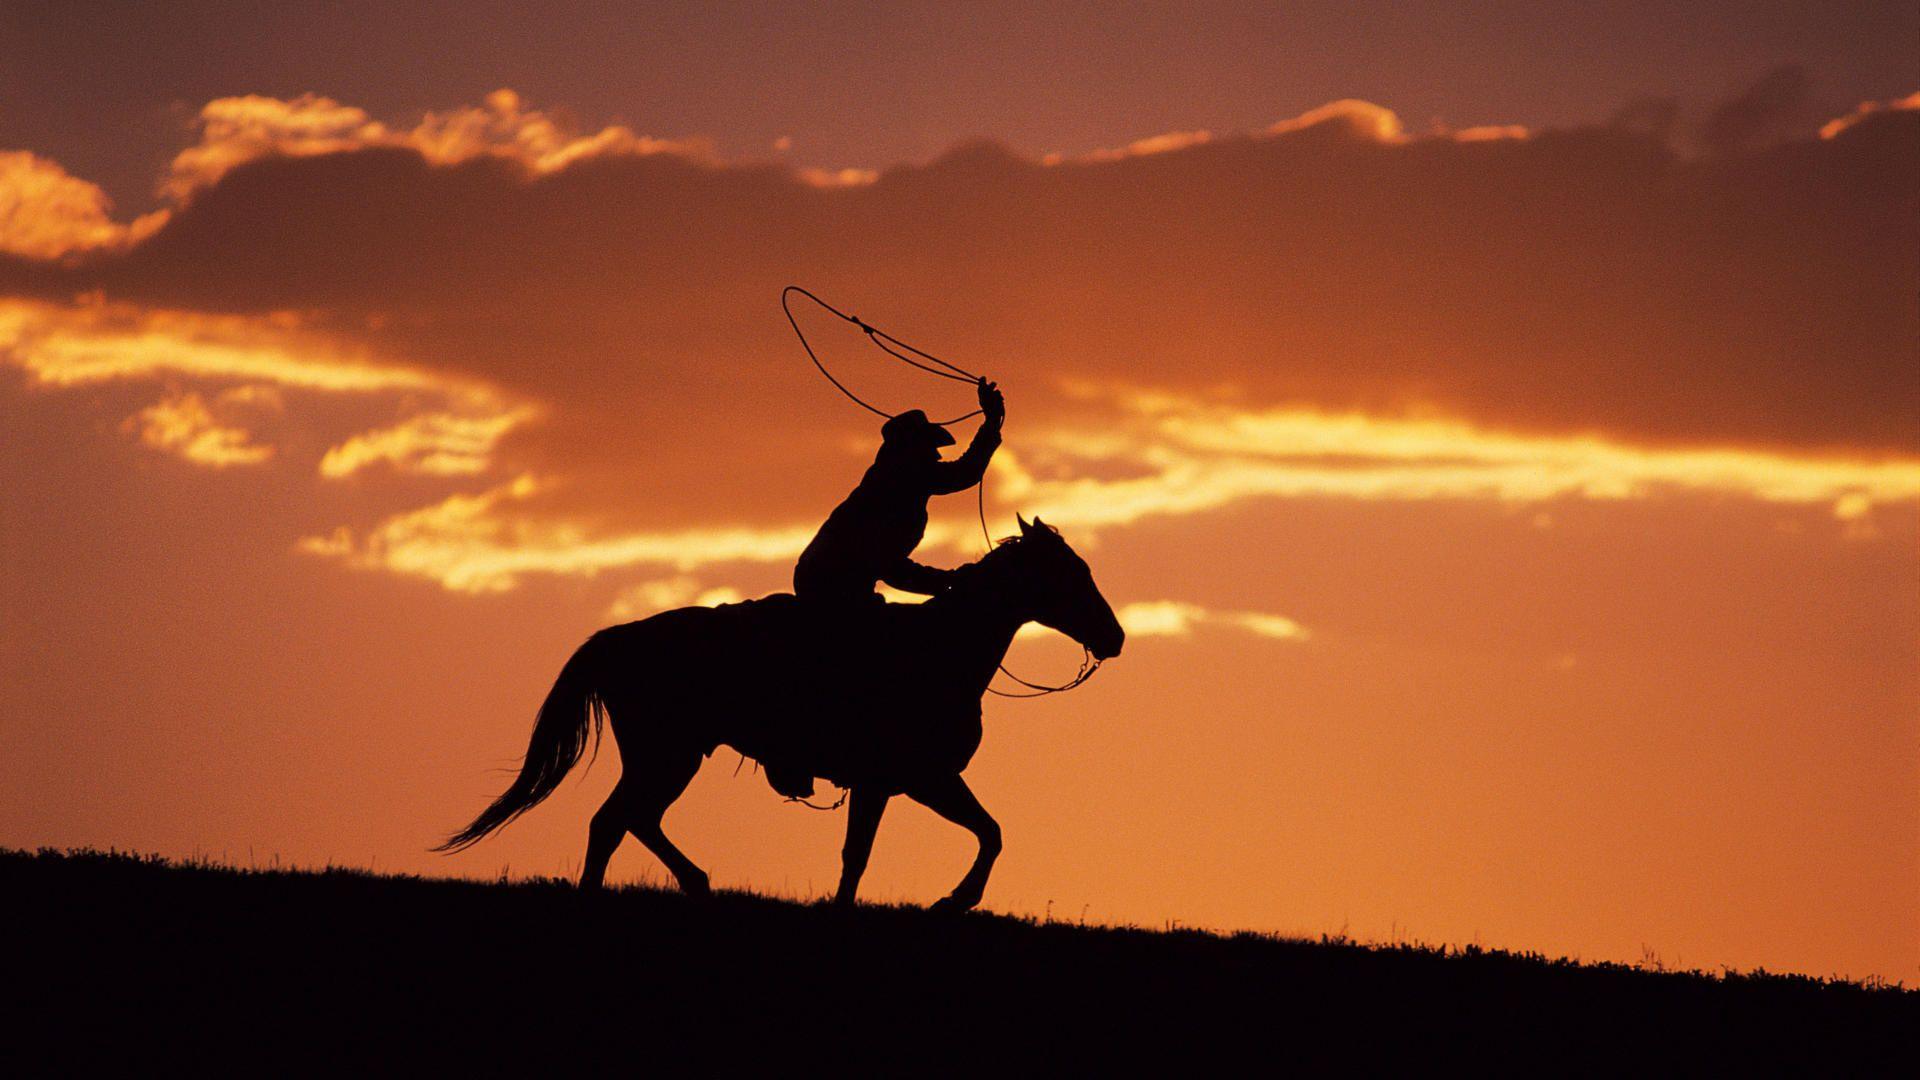 Wallpaper Evening Silhouette Cowboy Horse Free Desktop. Cowboys